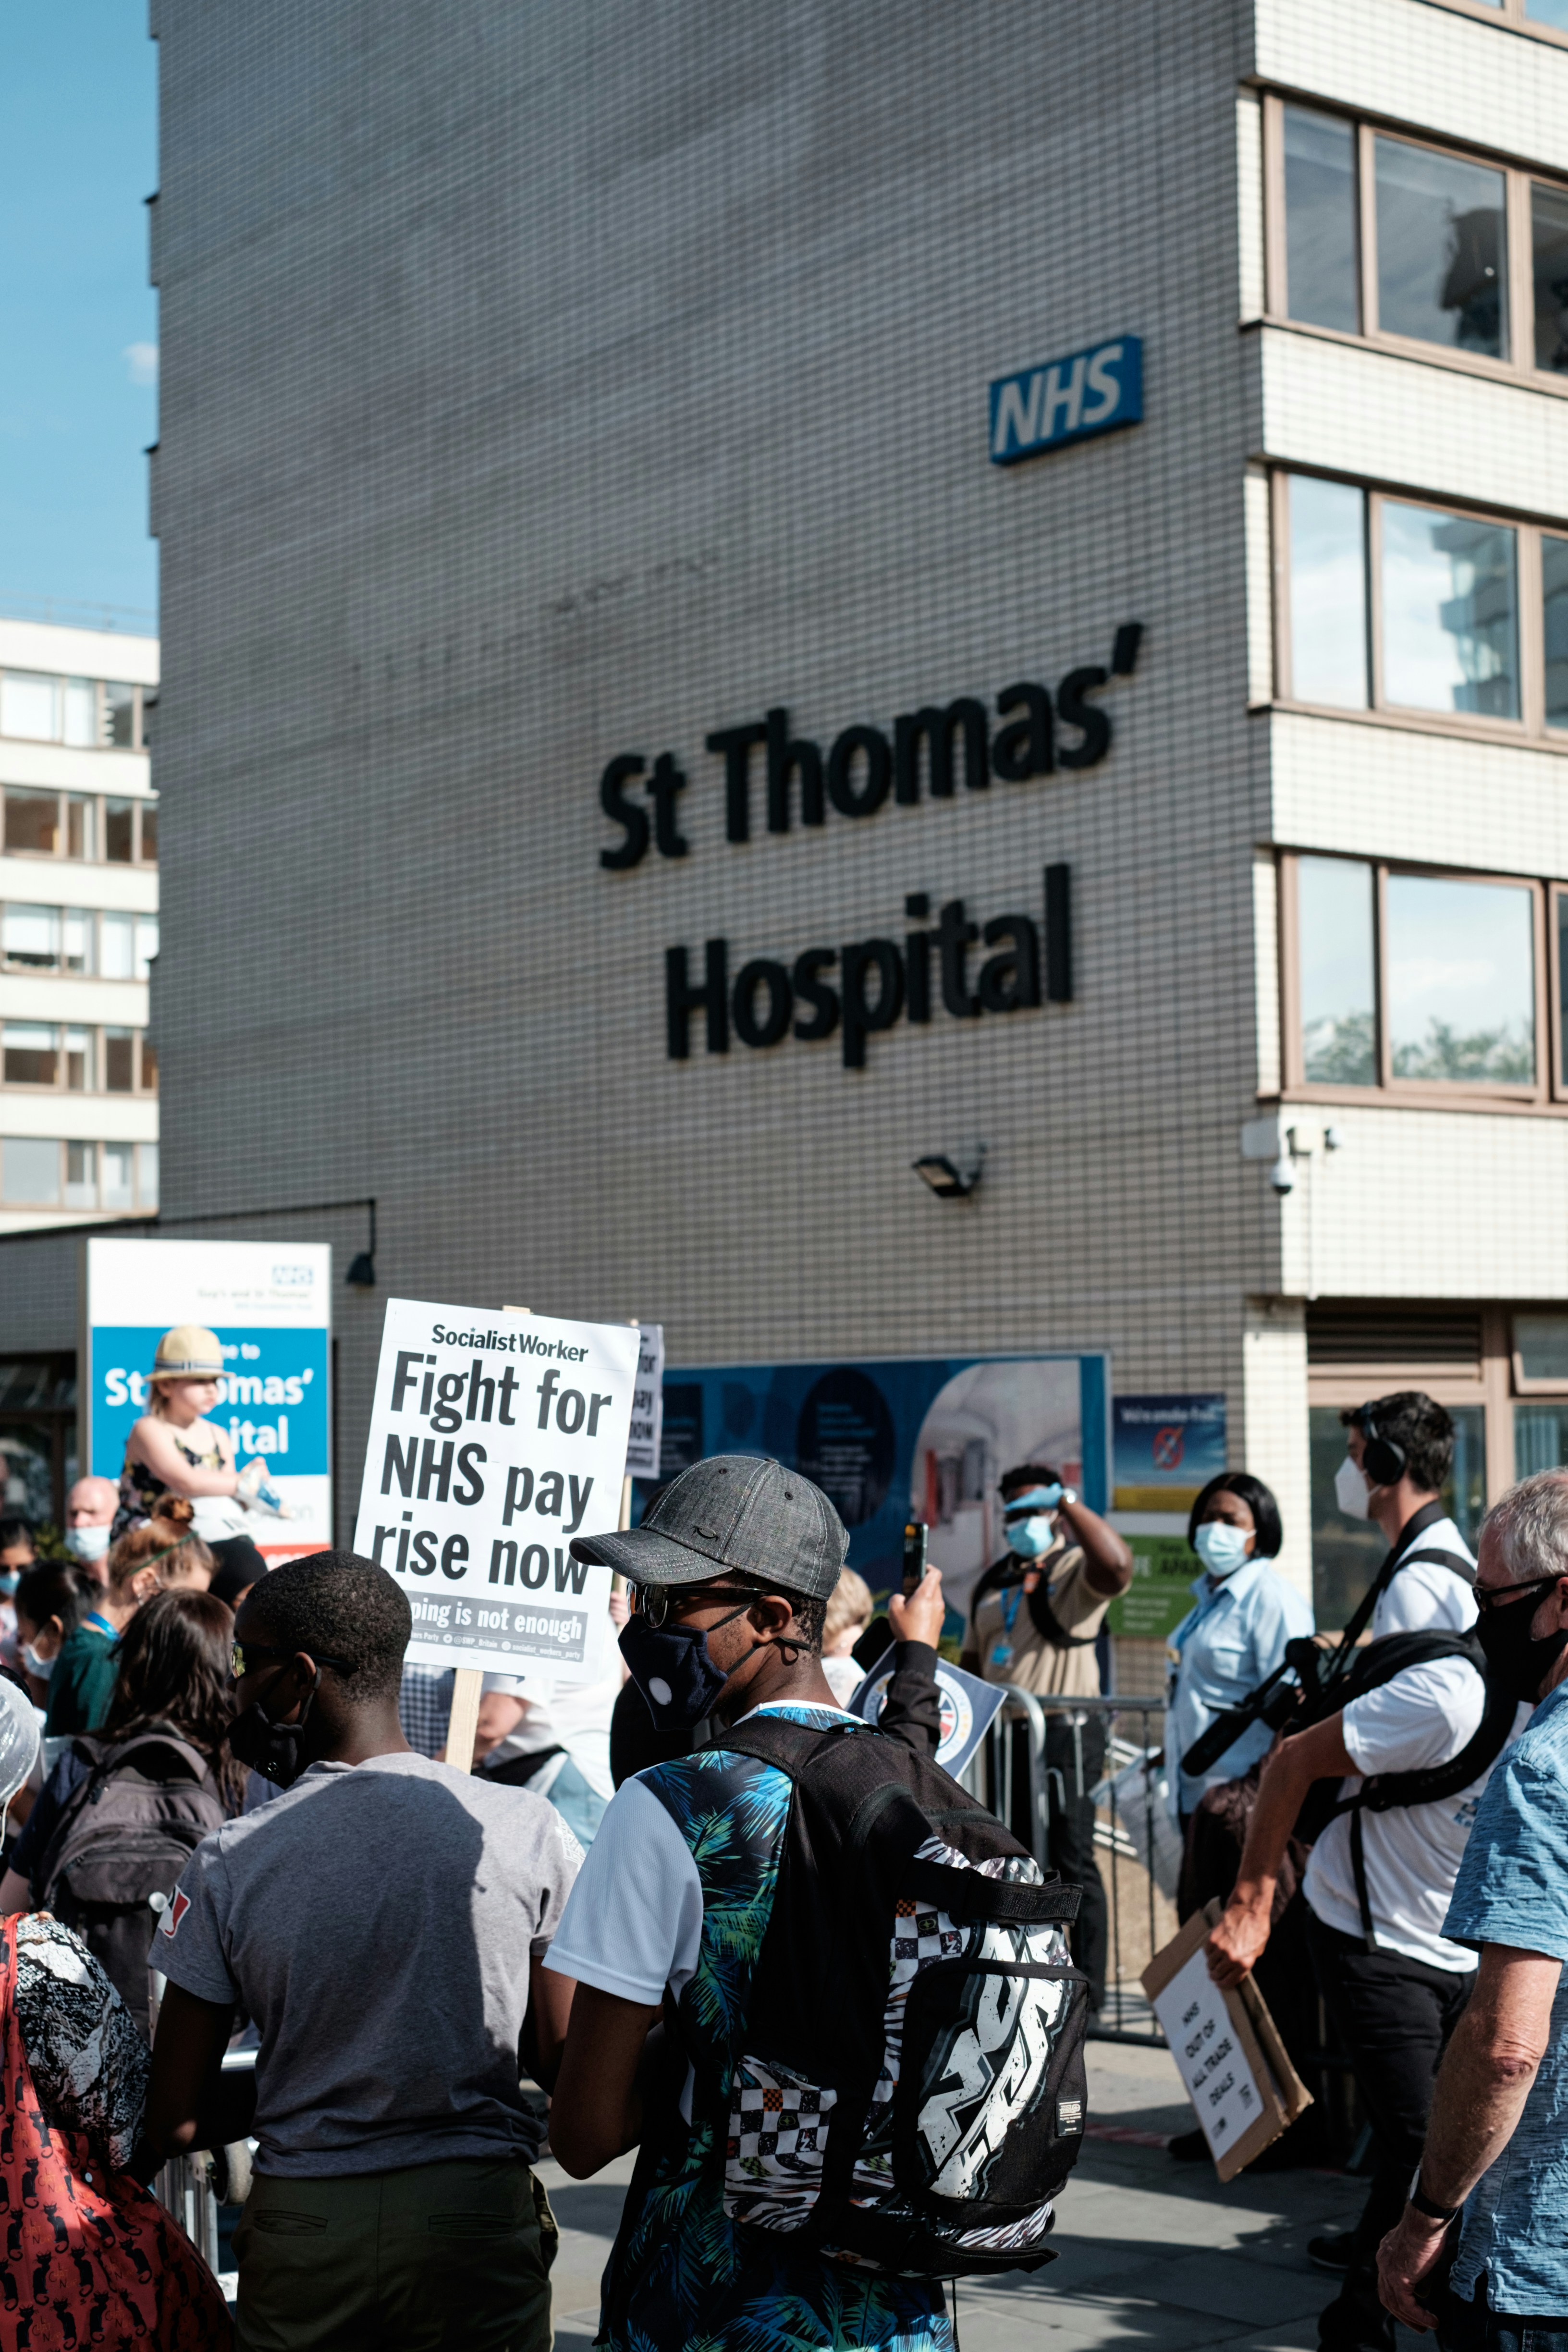 A protest outside a hospital